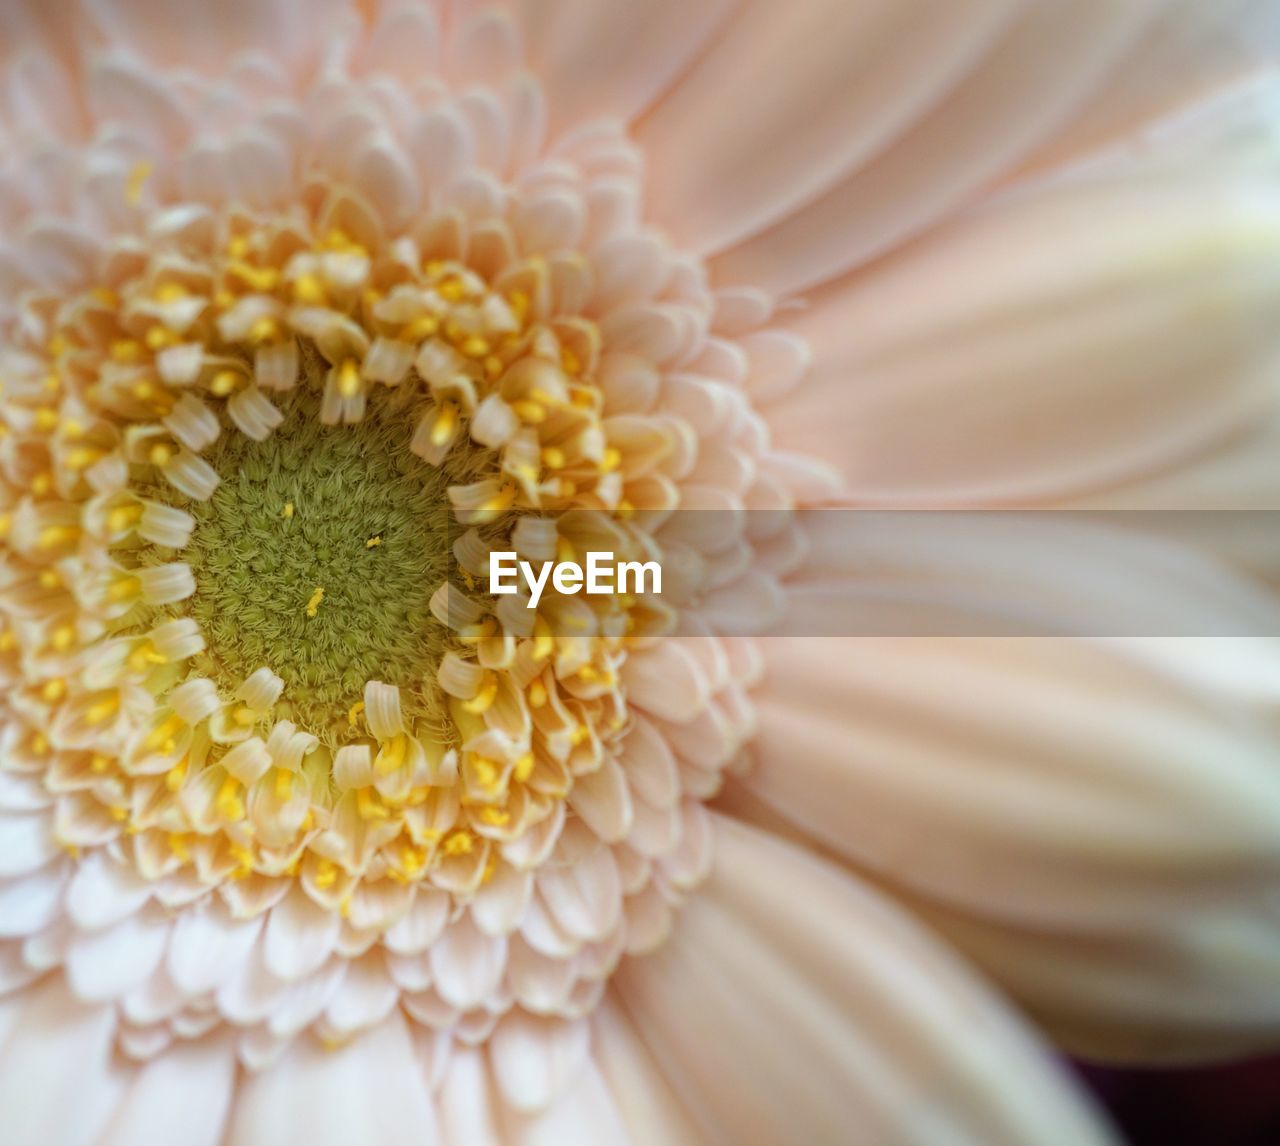 Close-up of white flower pollen